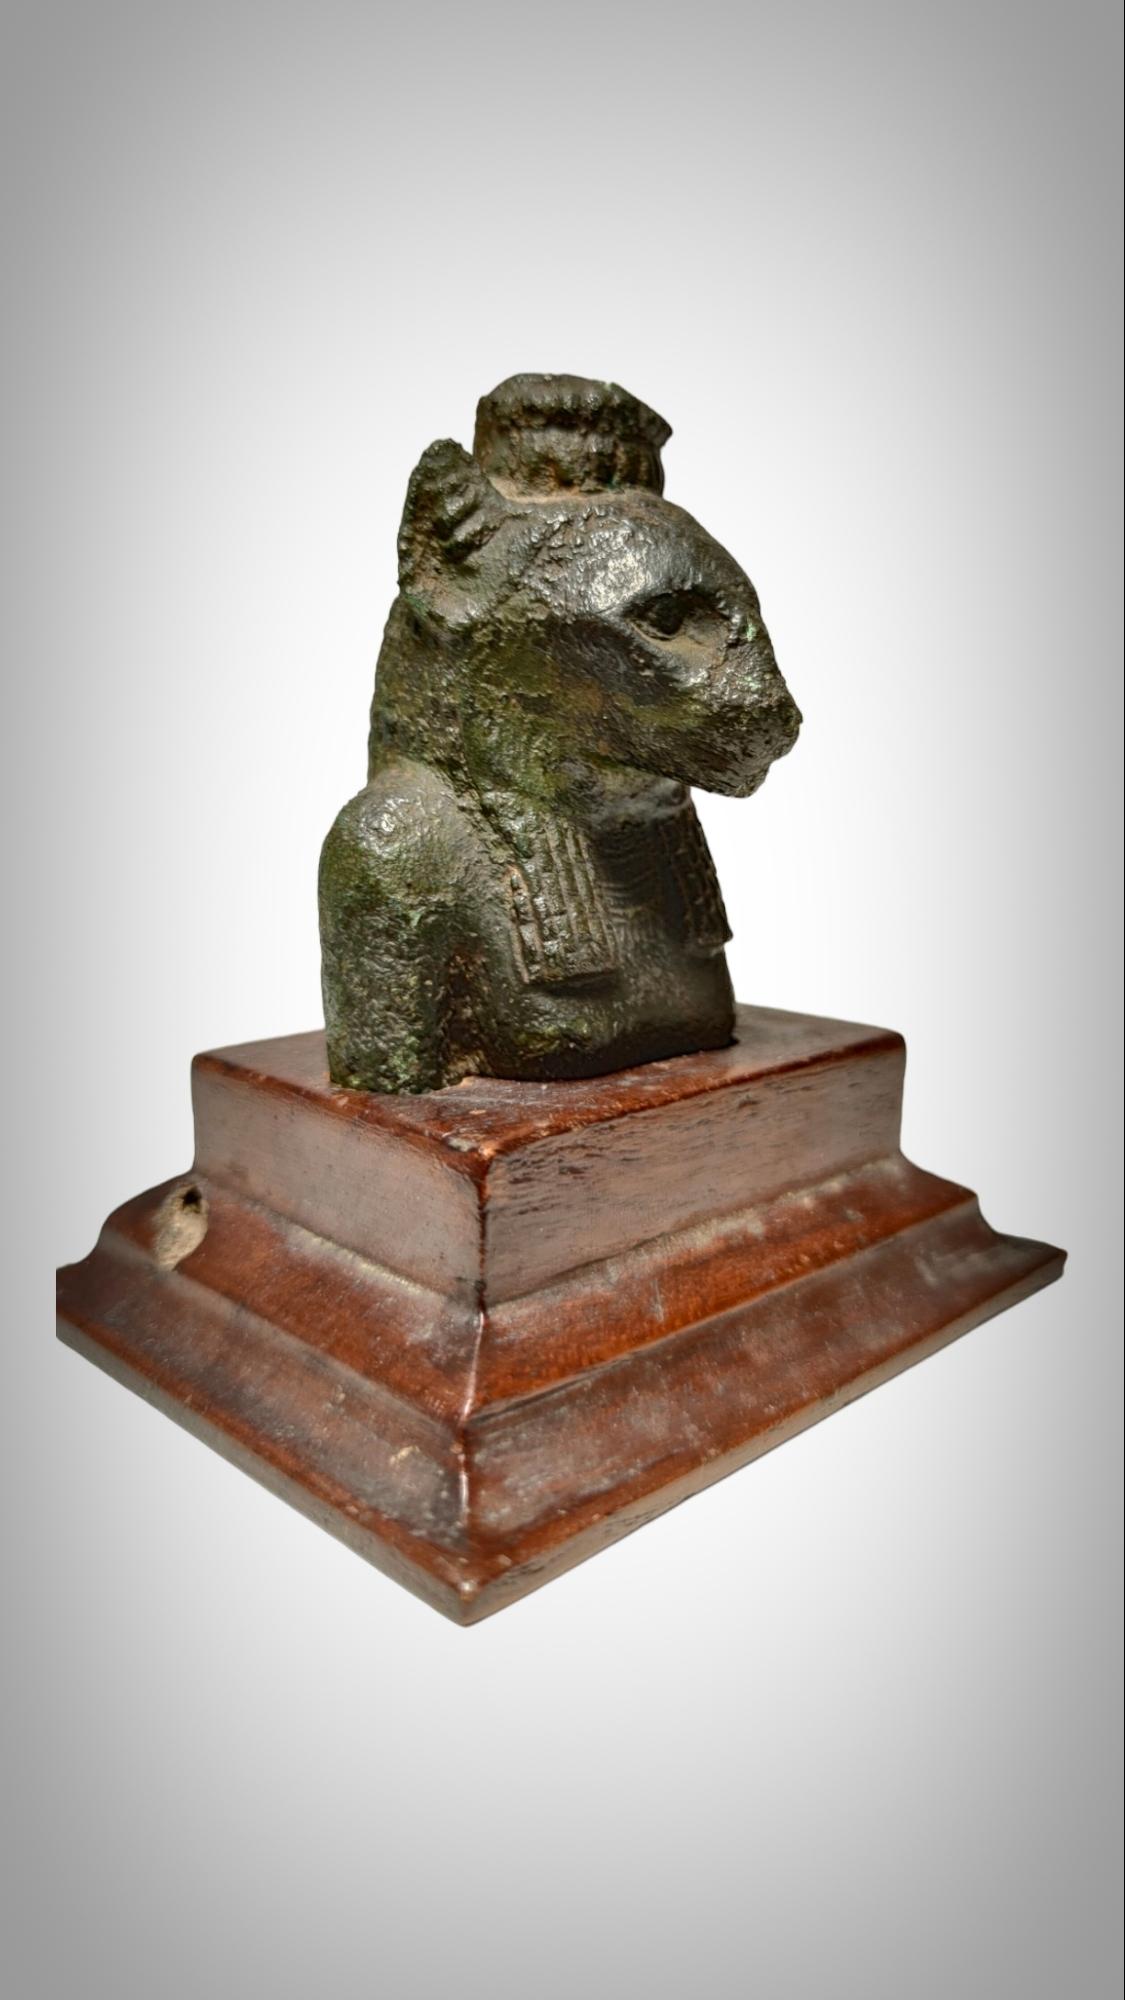 Egyptian Bronze Figure of a Seckhmet Lion-Headed Goddess, 21st/25th Dynasty, 1075-525 BC
The lion-headed goddess possibly seated.8x4x5 cm.Bronce macizo. Provenance: Collection Dr. Professor: Udo Oberem (1923-1986) November 24, 1986, Udo Oberem .